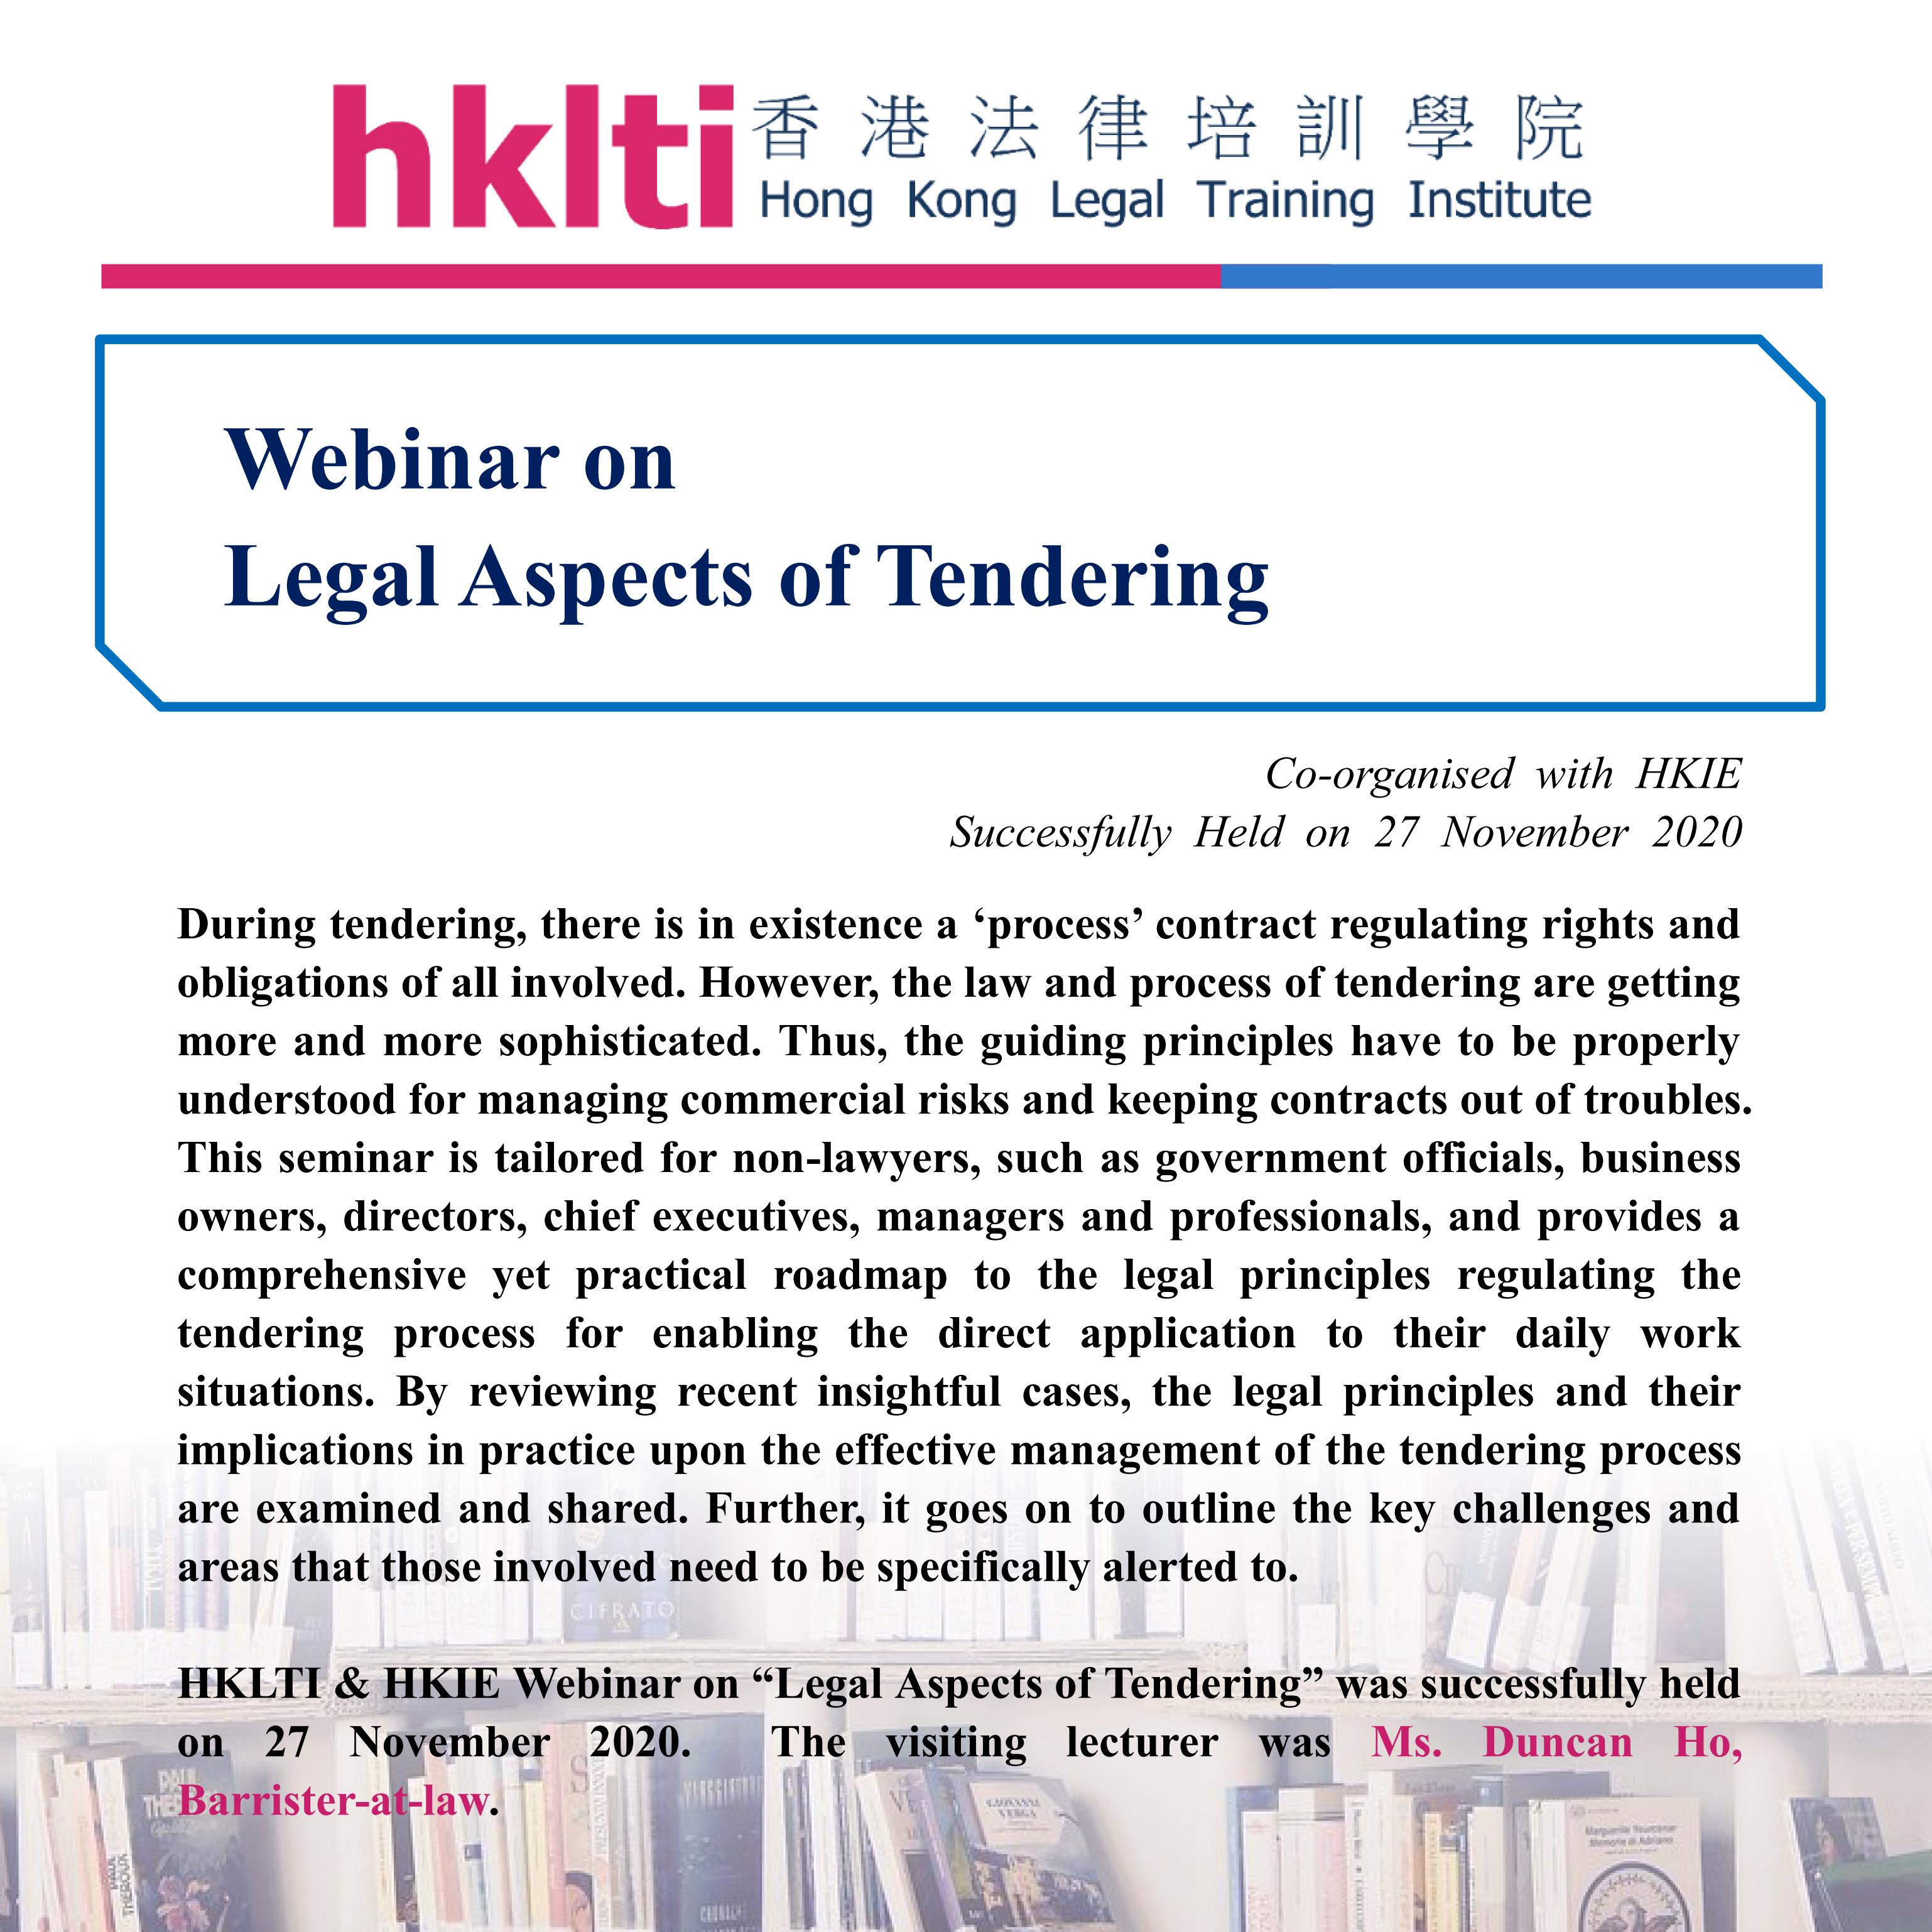 hklti hkie webinar legal aspects of tendering seminar report 20201127